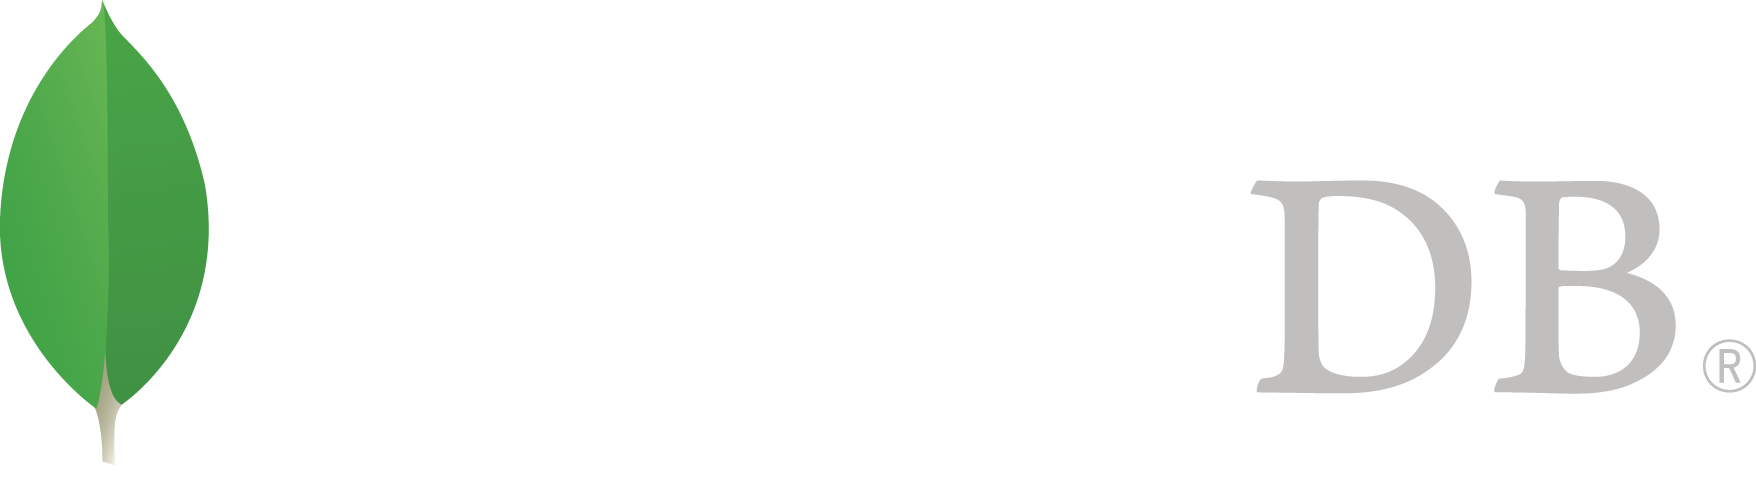 Hundreds of popular MongoDB a